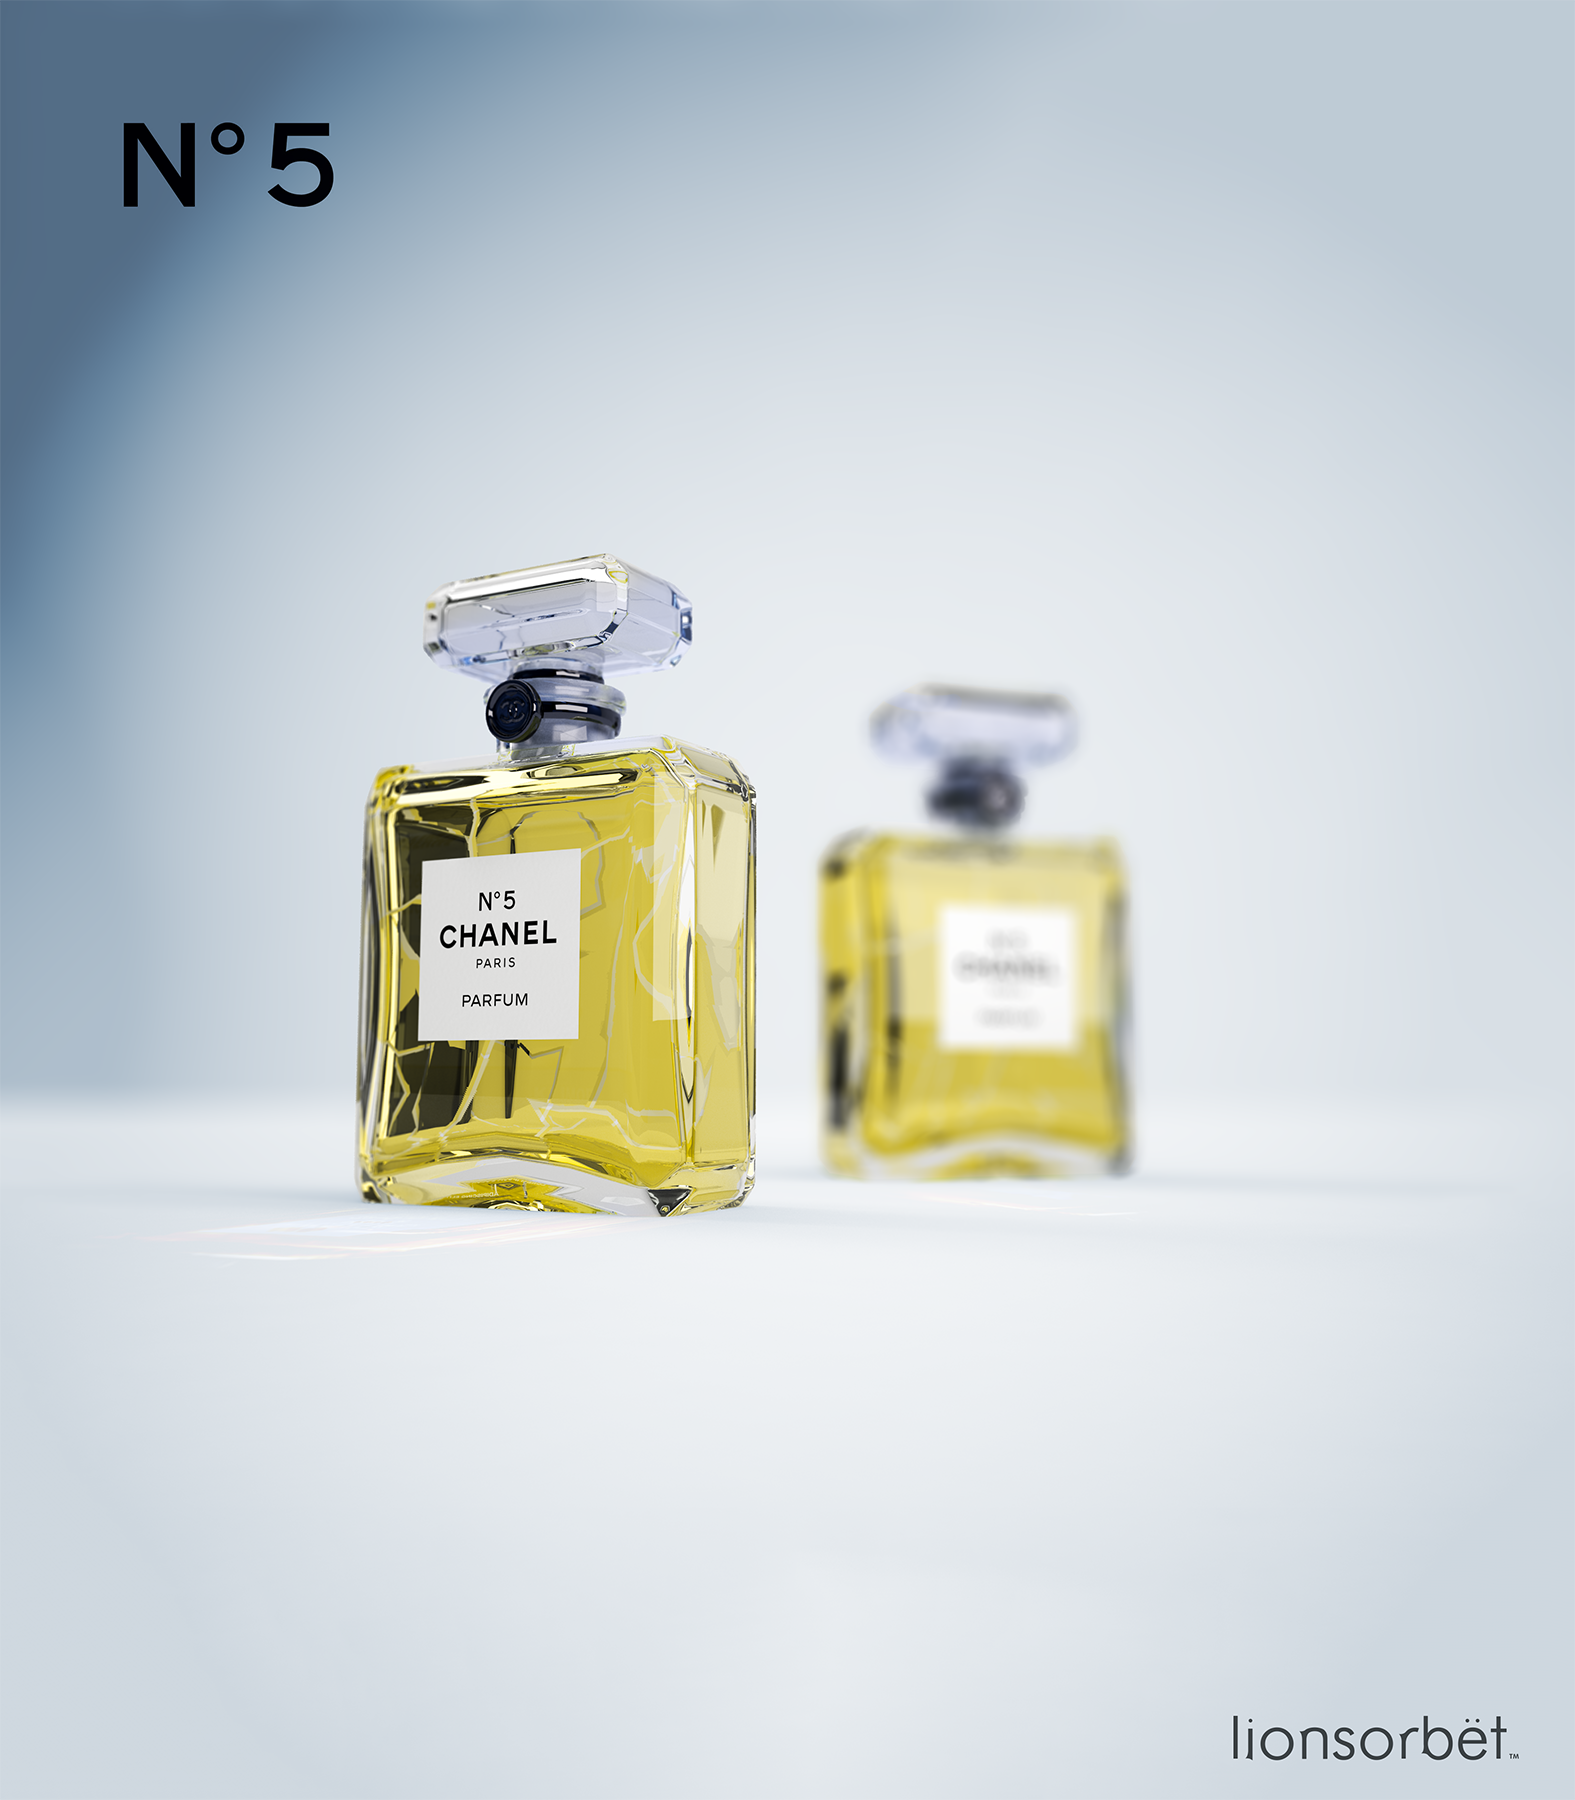 Chanel No5 L'eau Fragrance iconic bottle design, 3D render project Packaging  — Lionsorbet